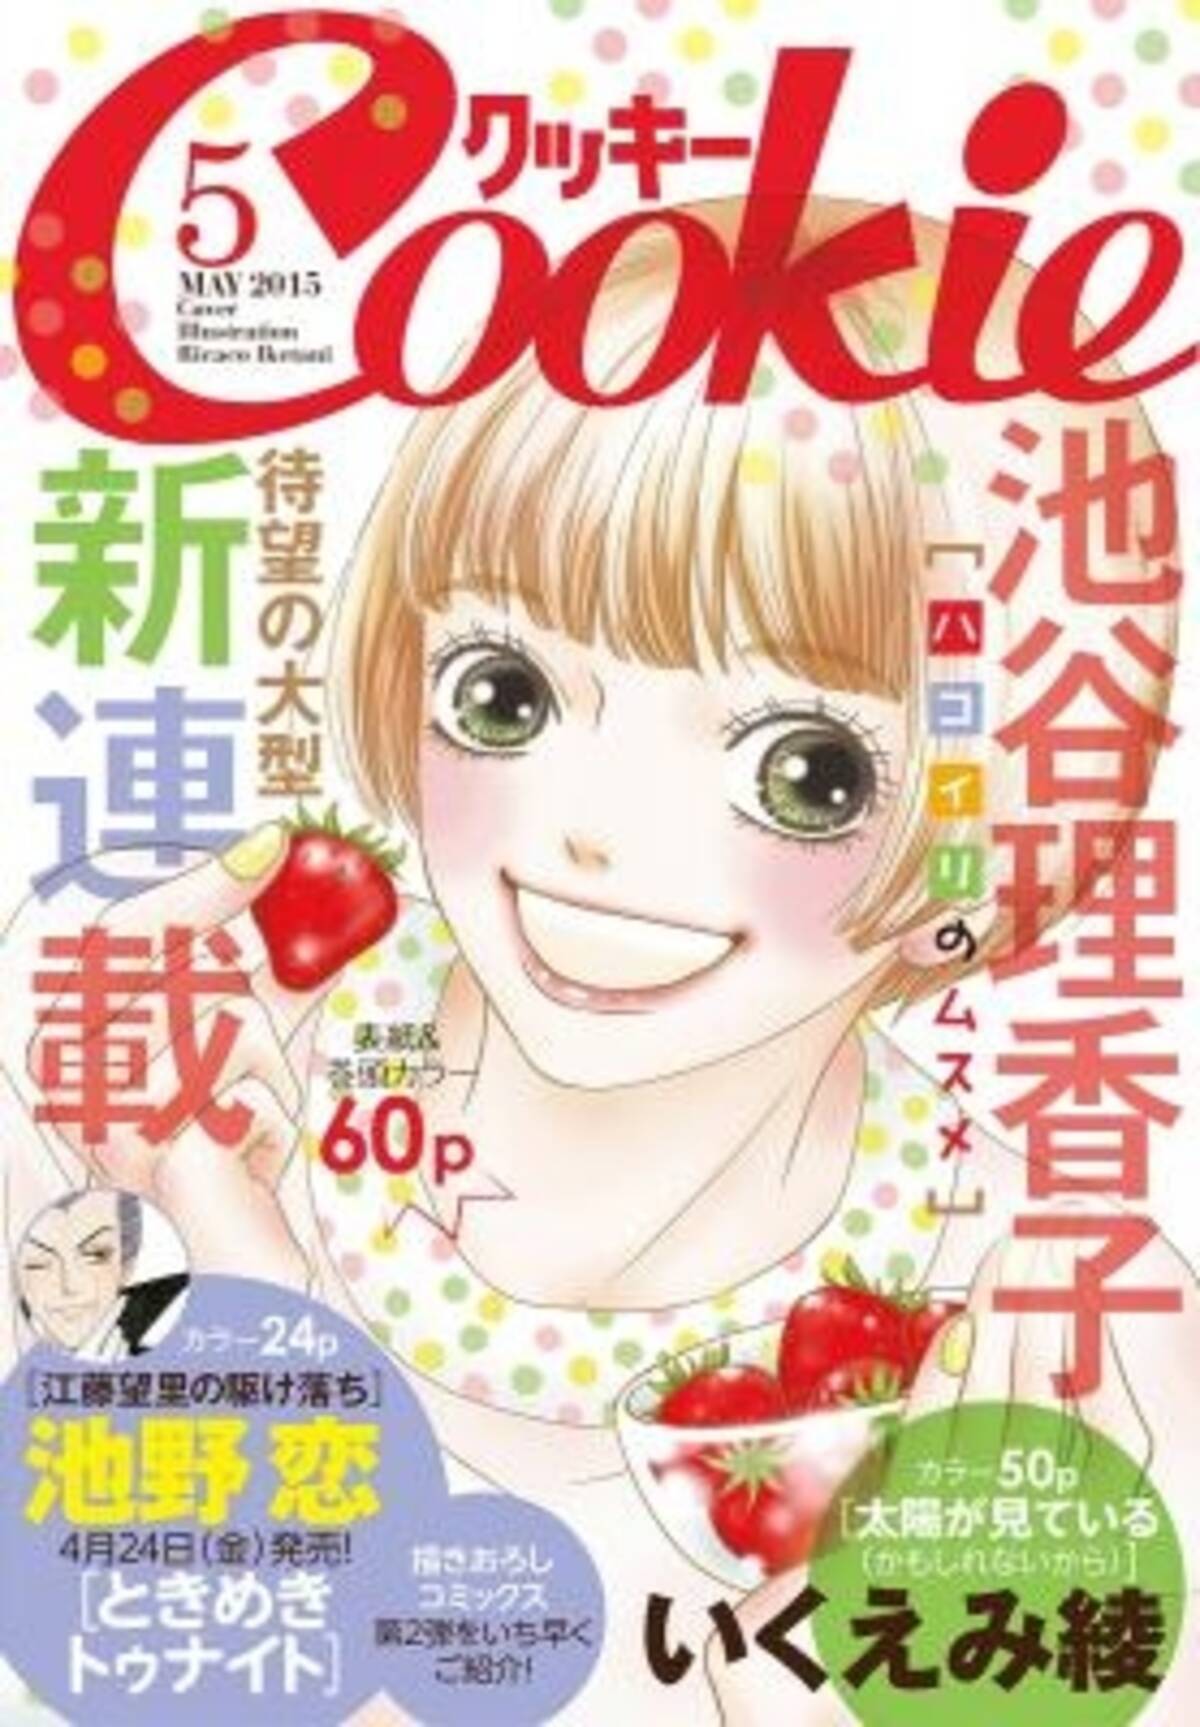 Cookie 電子版の配信がスタート 集英社の少女マンガ本誌では初 15年4月1日 エキサイトニュース